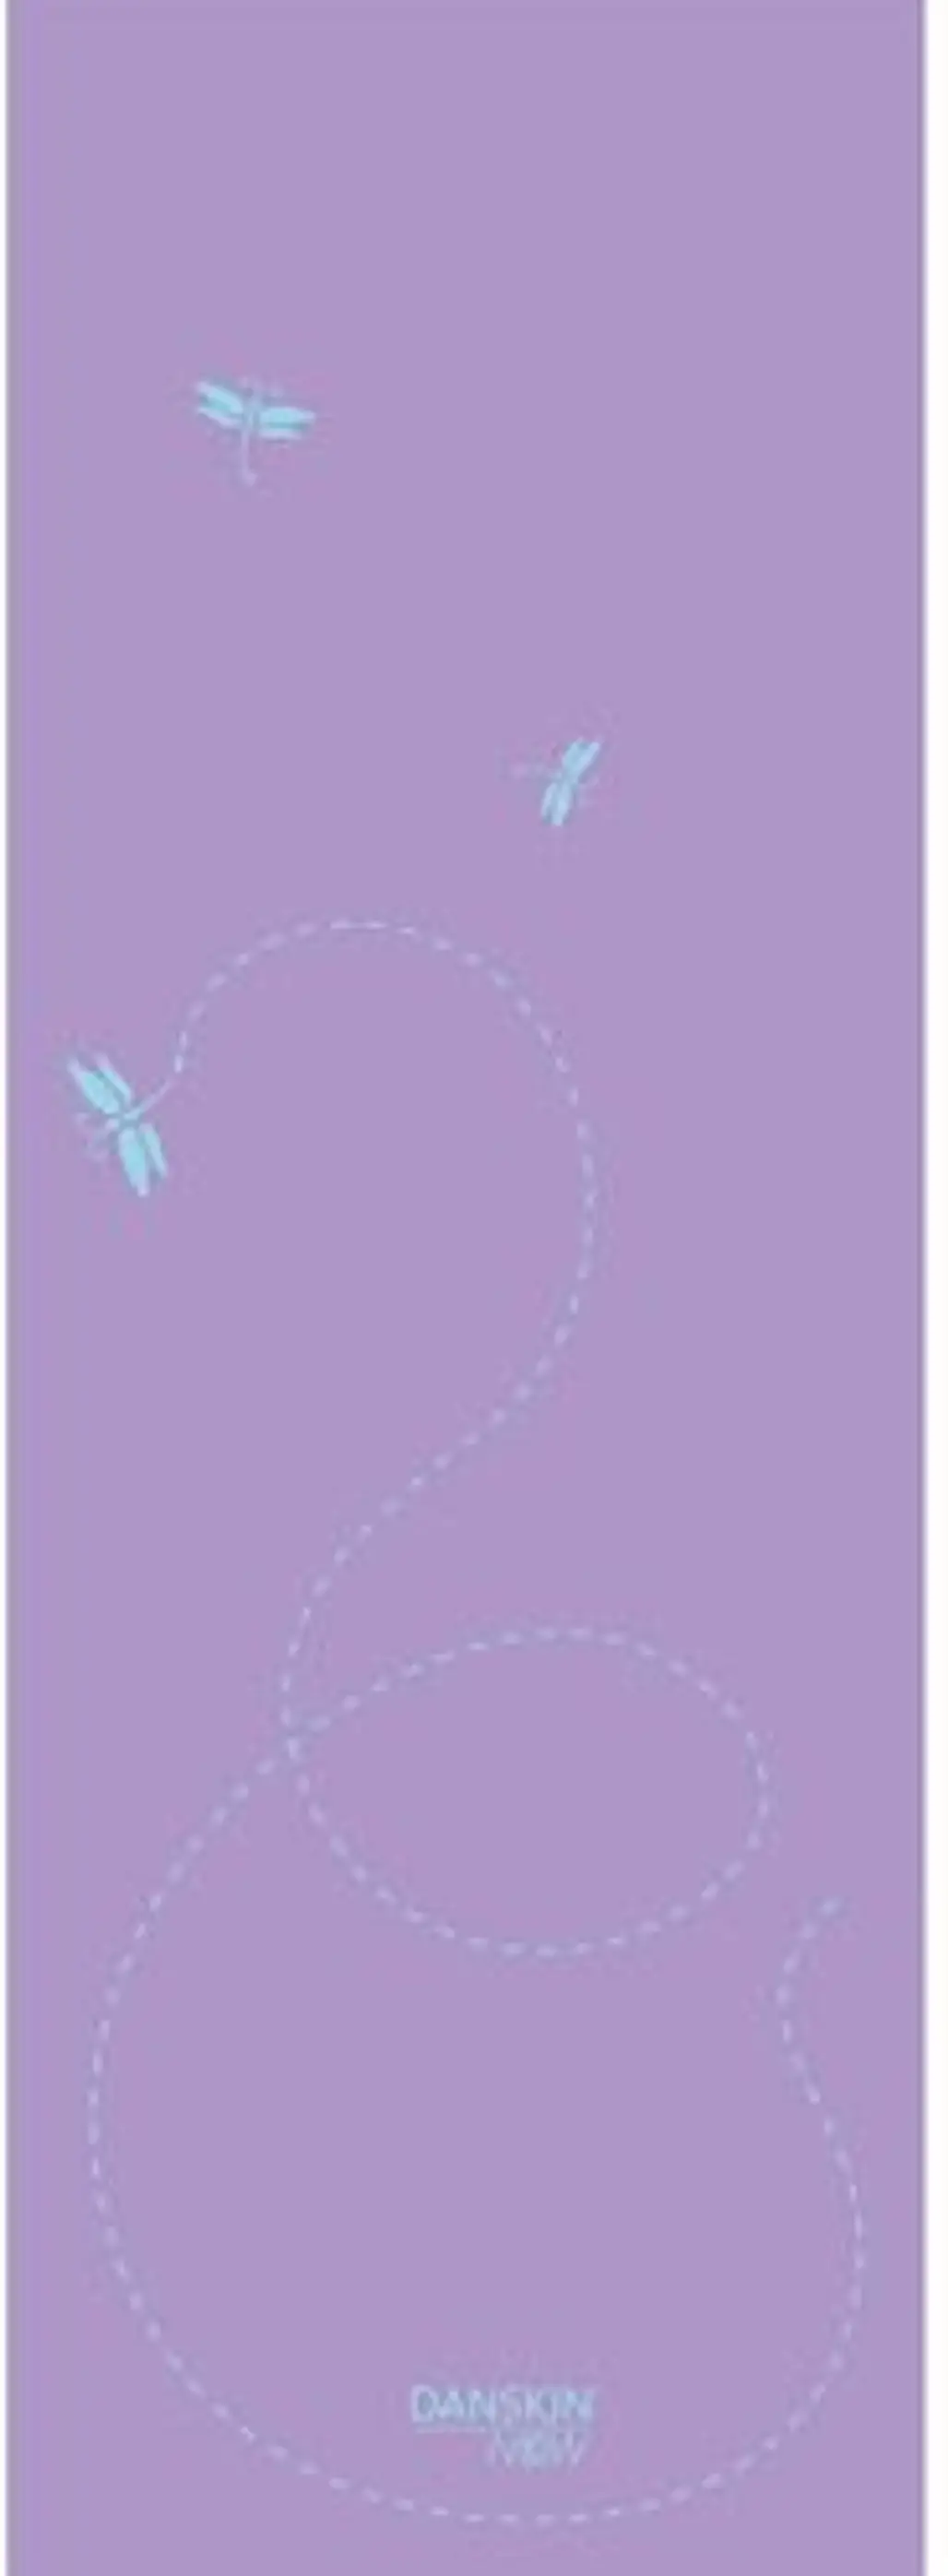 Danskin NOW 3mm Printed Happiness Yoga Mat, Lavender Butterflies